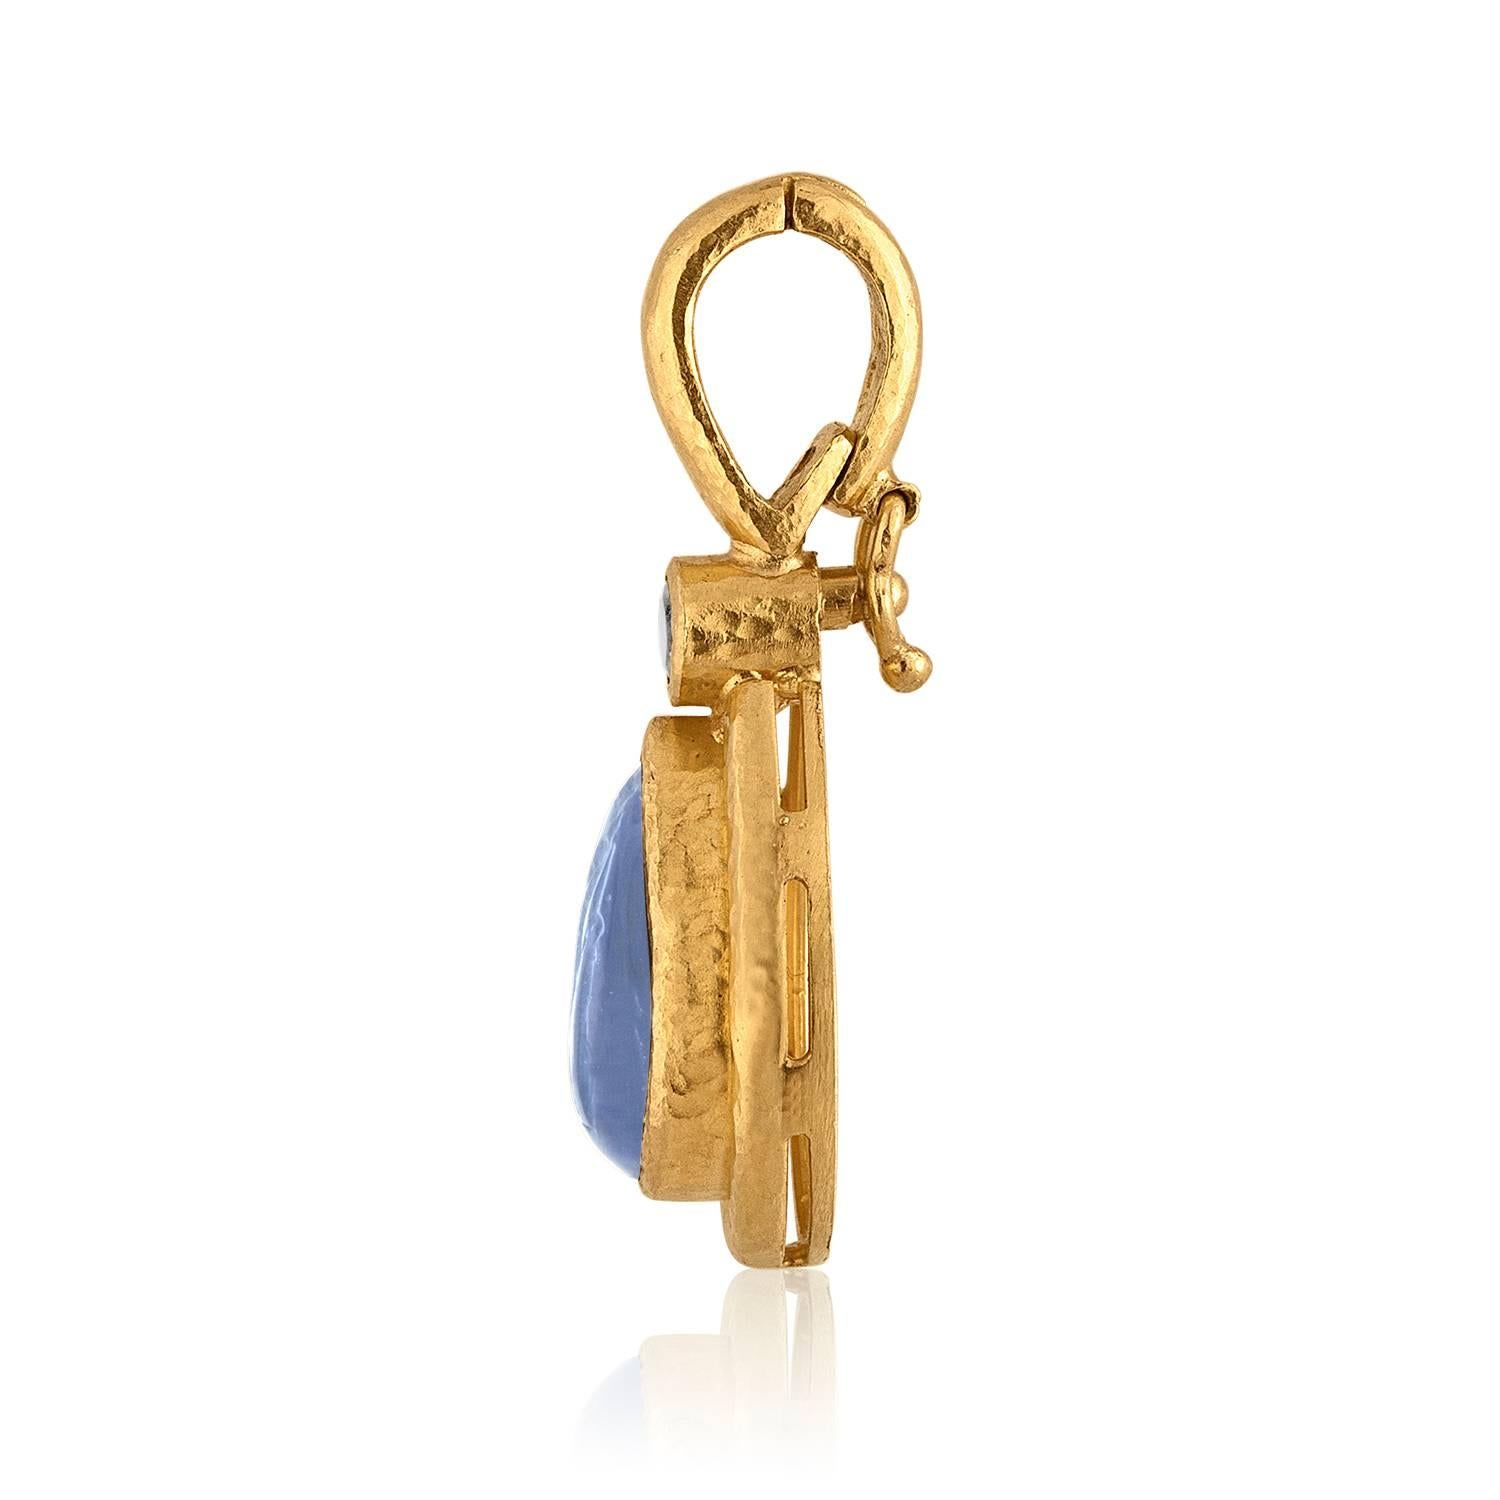 Elizabeth Locke Blue Intaglio Venetian Teardrop Pendant Set in 19K Hammered Gold with a small moonstone.
The pendant measures 1.5